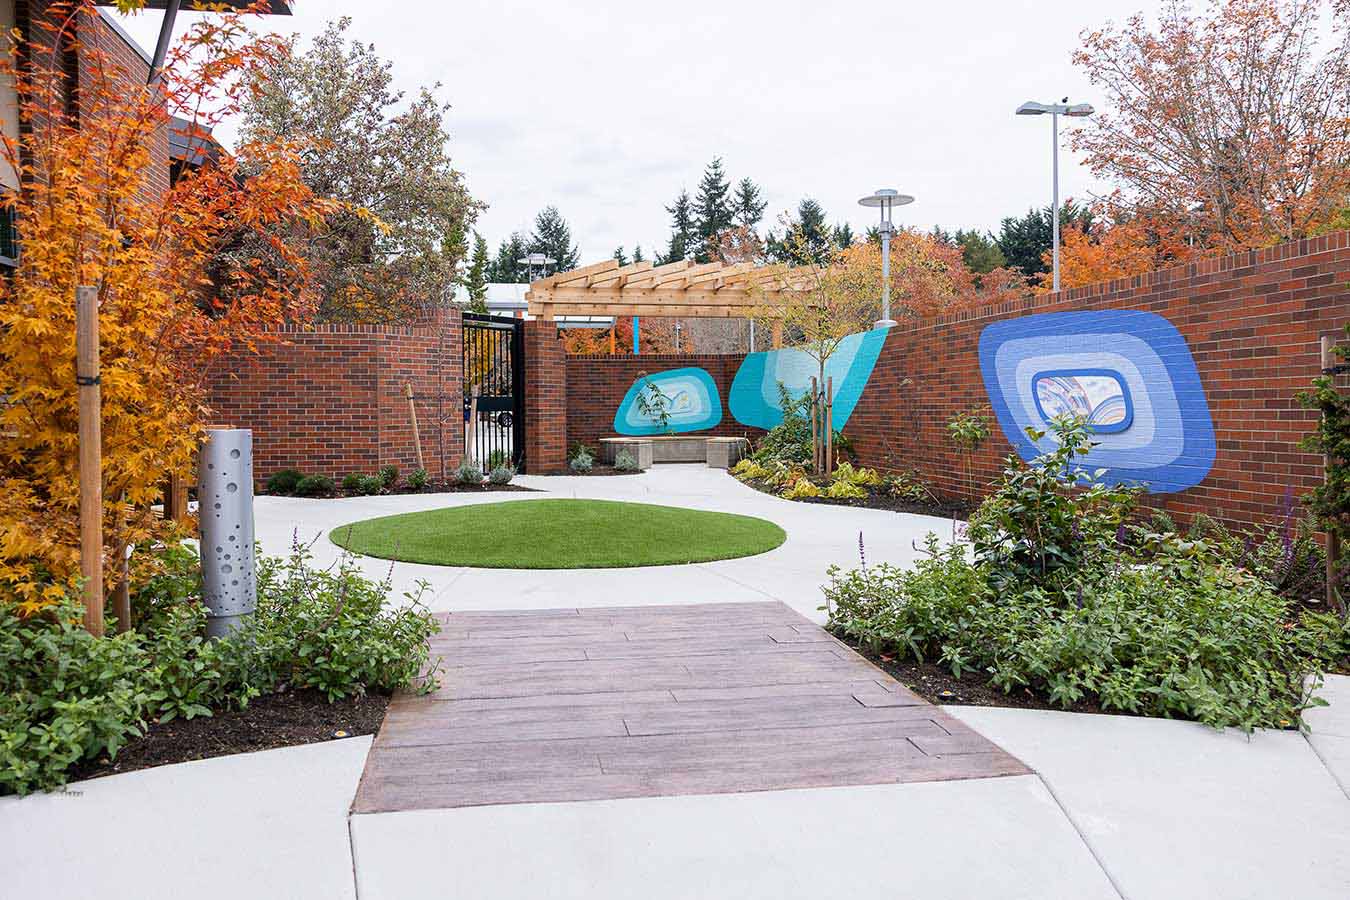 The Sensory Garden at Seattle Children's Magnuson